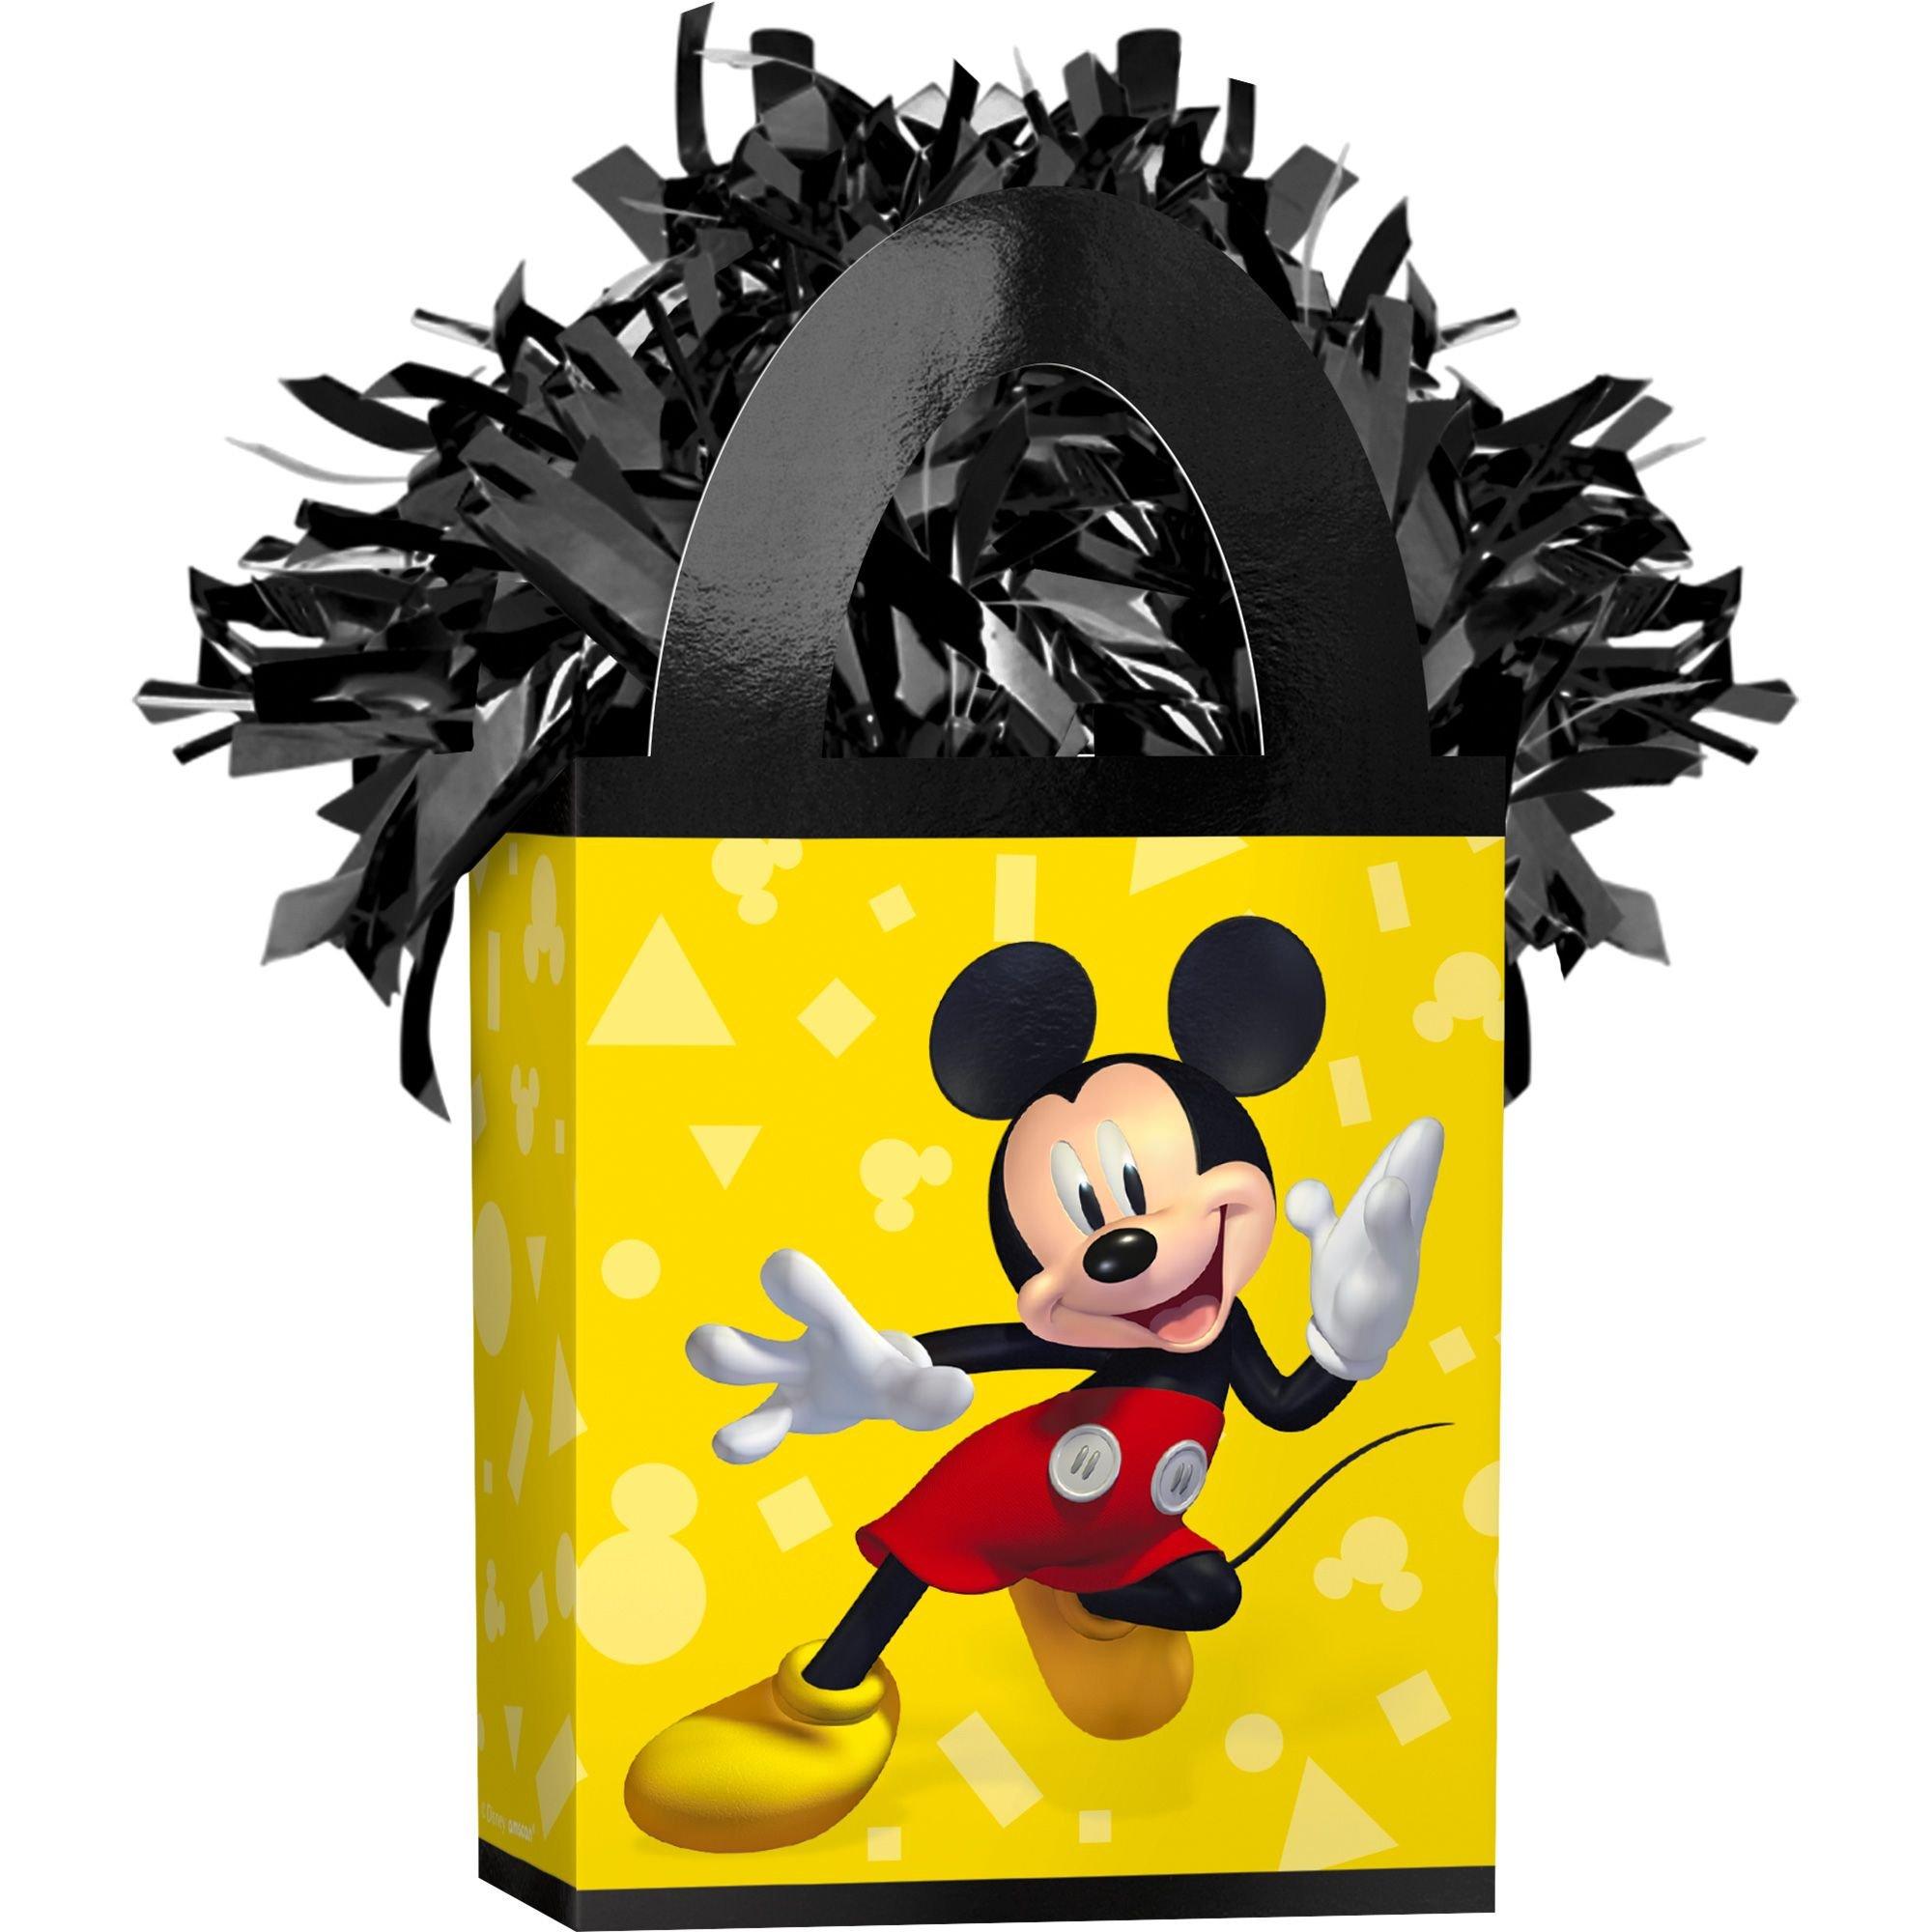 Balloon Stuffed Gift - Disney Treats and Mickey Plush Gift